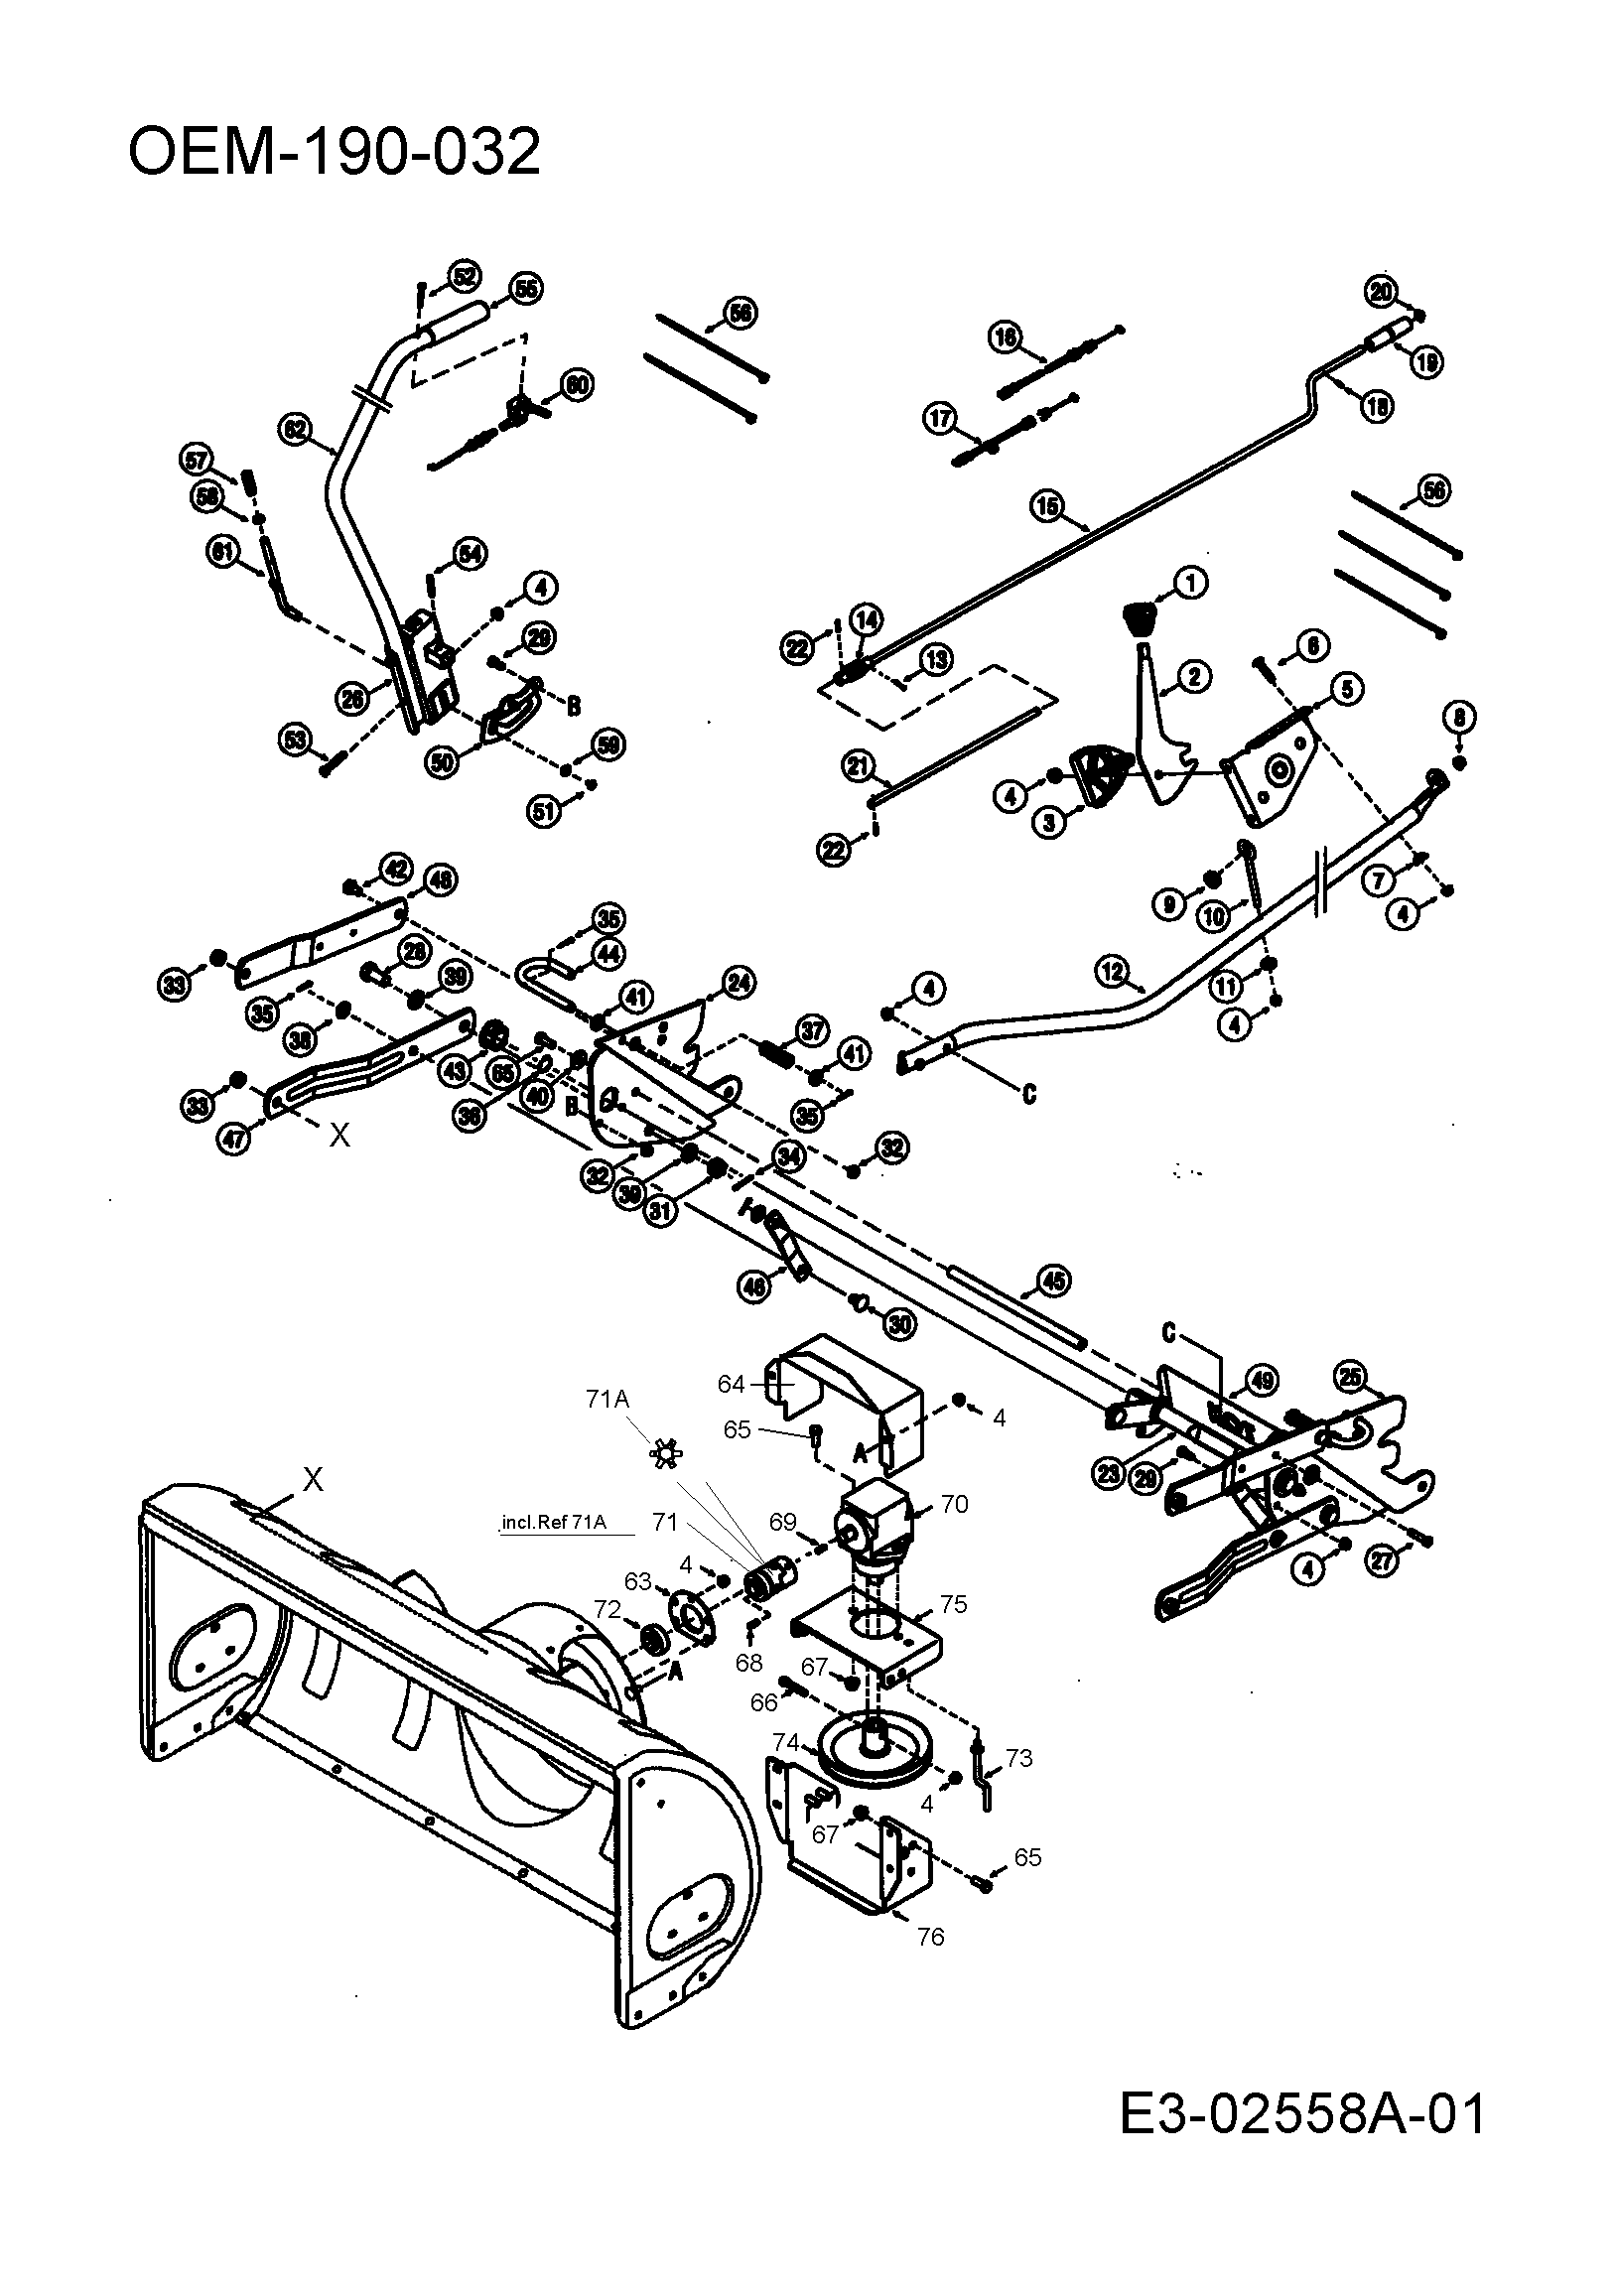 OEM-190-032 (2006) Aushebung Schneefräsengehäuse, Getriebe MTD Schneefräsen Ersatzteile